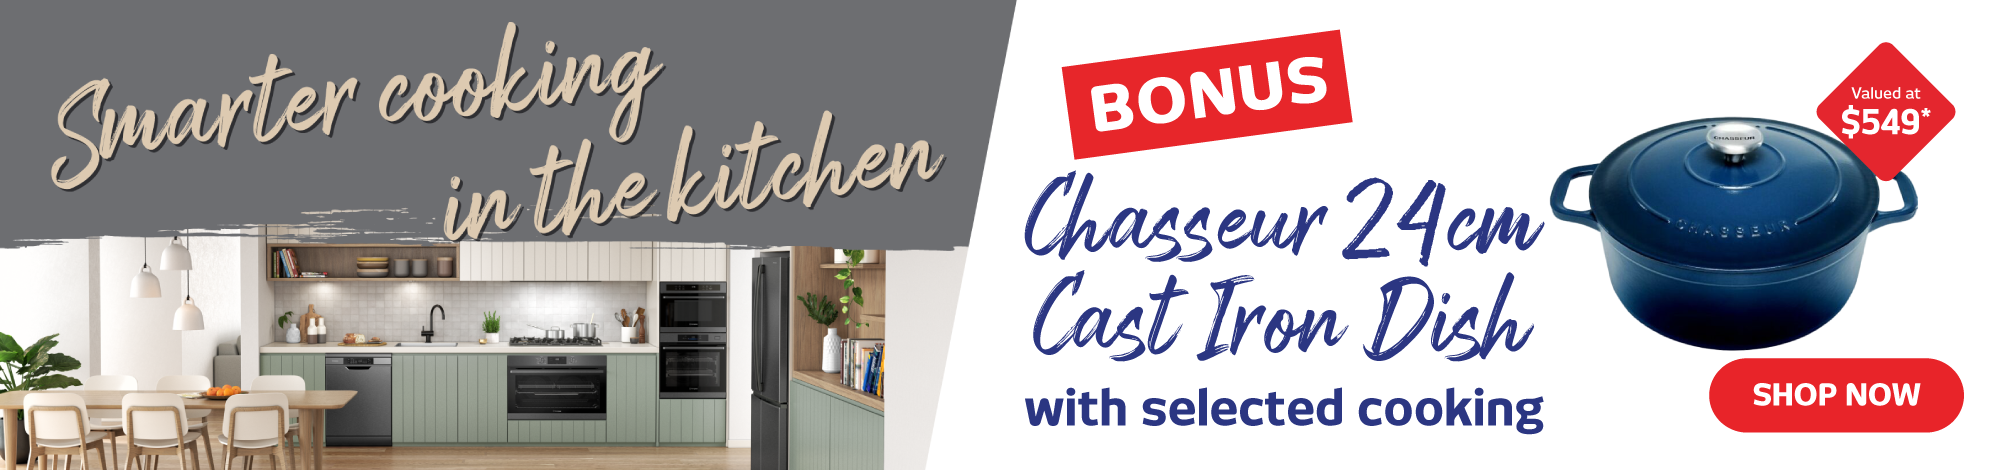 Bonus Chasseur 24cm Cast Iron Dish With Selected Cooking Appliances